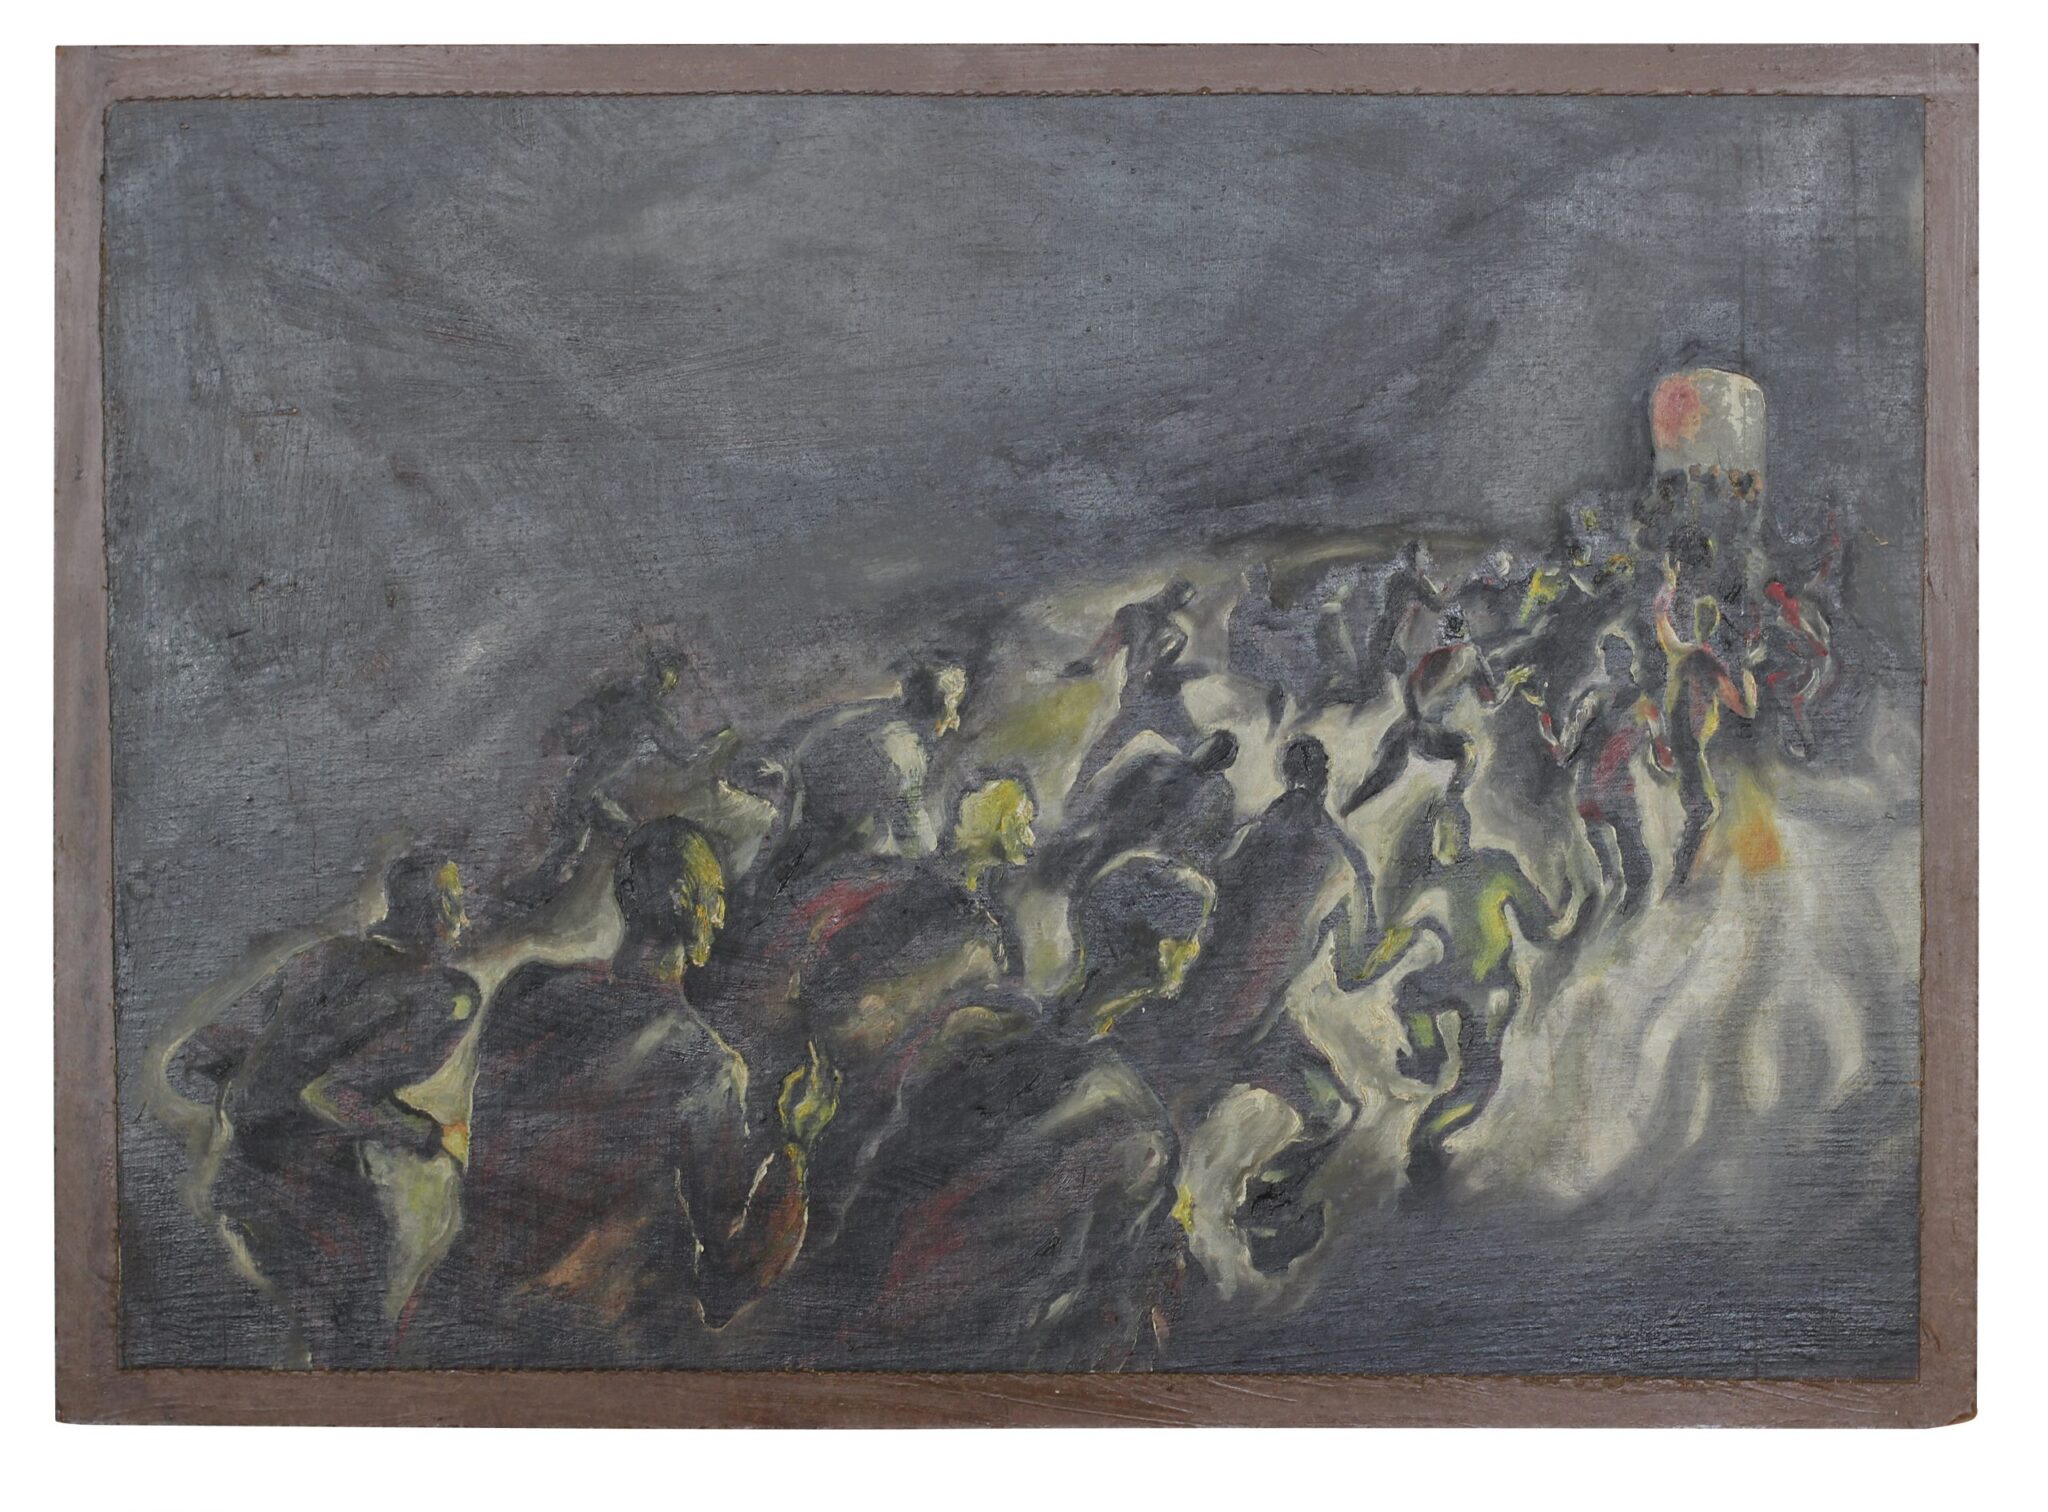 Boris Lurie: Prisoners Returning From Work, 1946-47, Oil on canvas mounted on masonite, 49,5 x 68,6 cm, BLAF.000320 © Boris Lurie Art Foundation